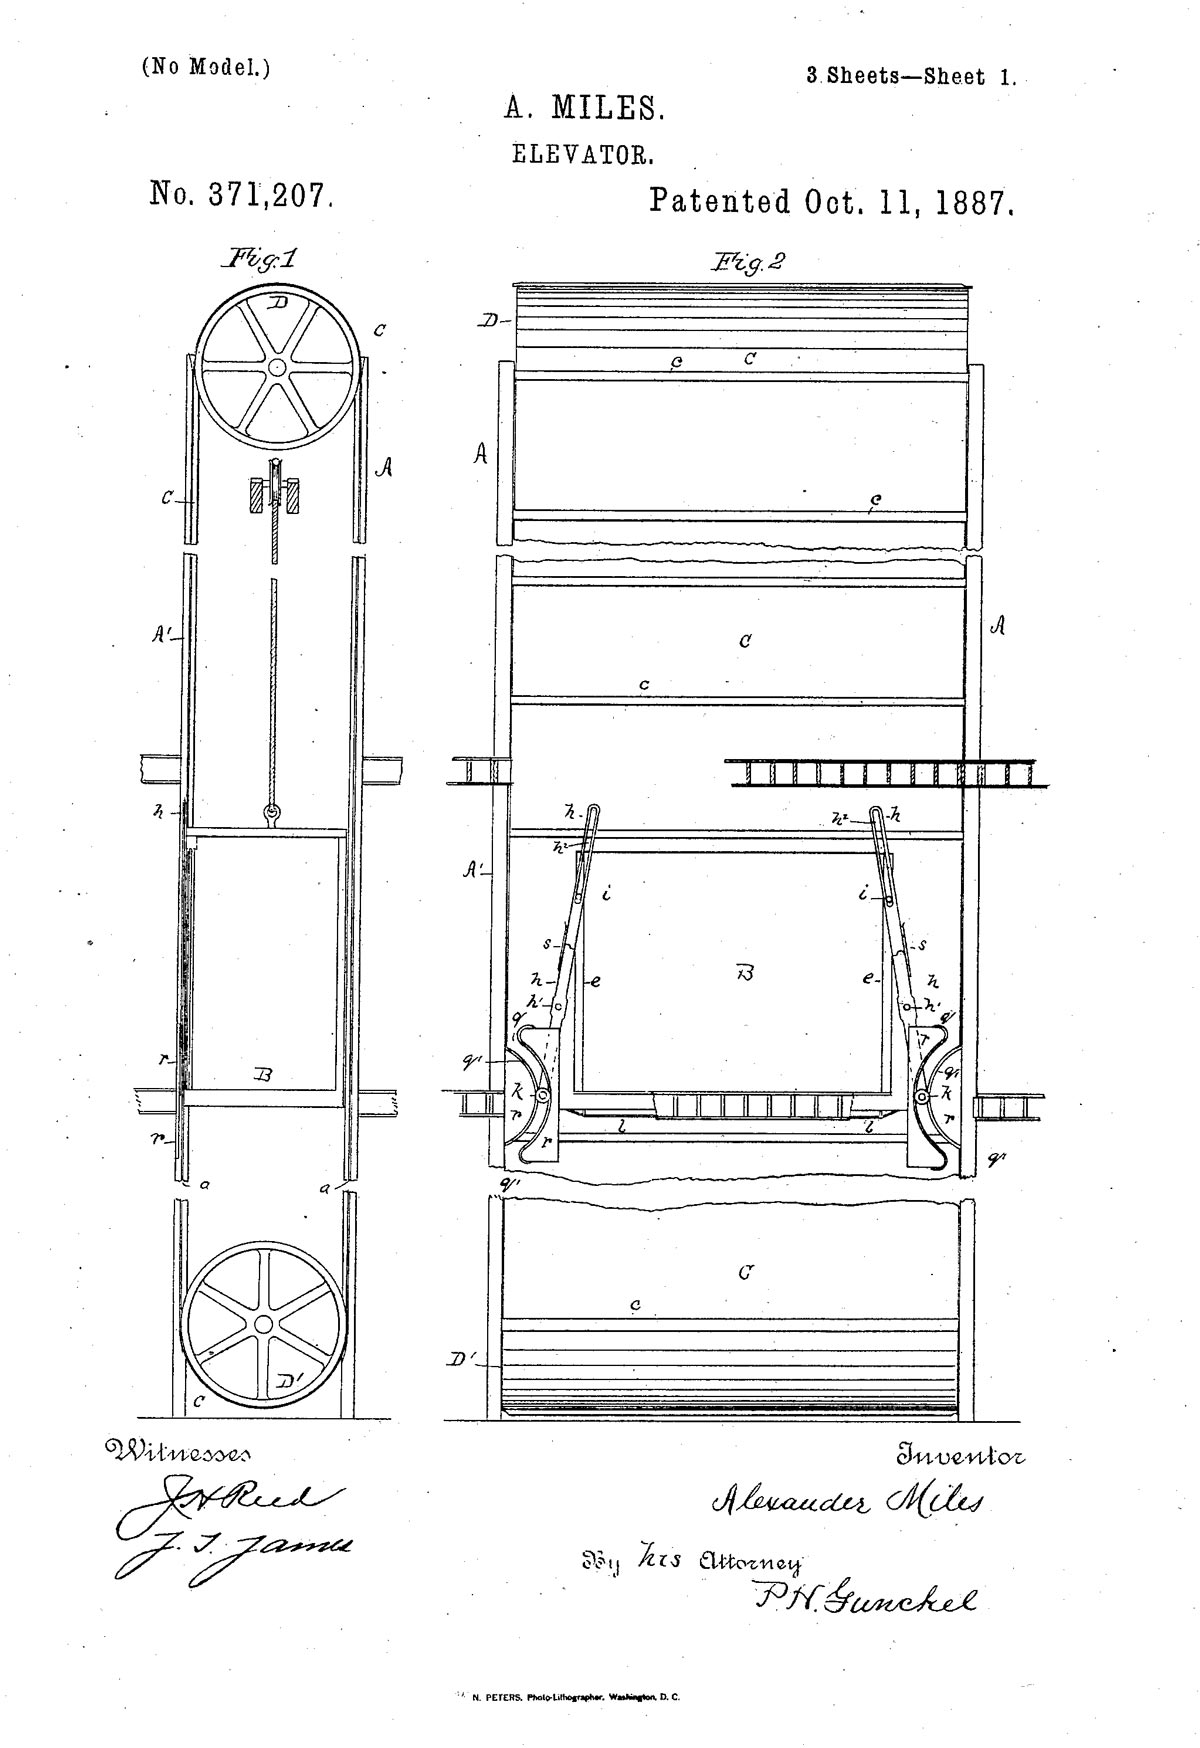 Alexander Miles Patent Improvements in Elevators